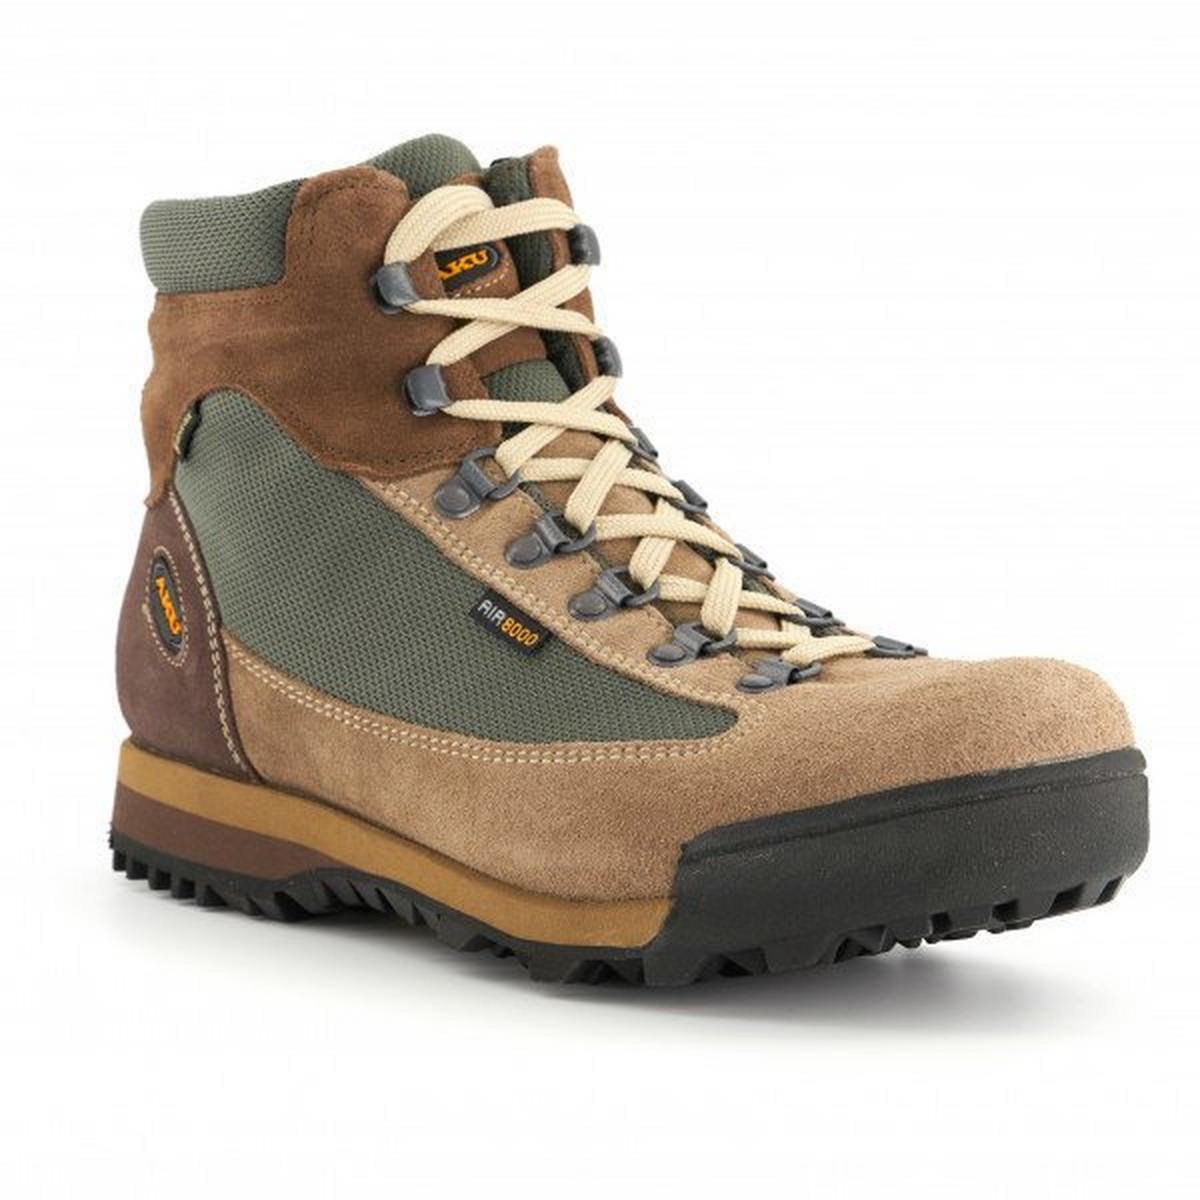 AKU Slope Original GORE-TEX Hiking Boots - Green